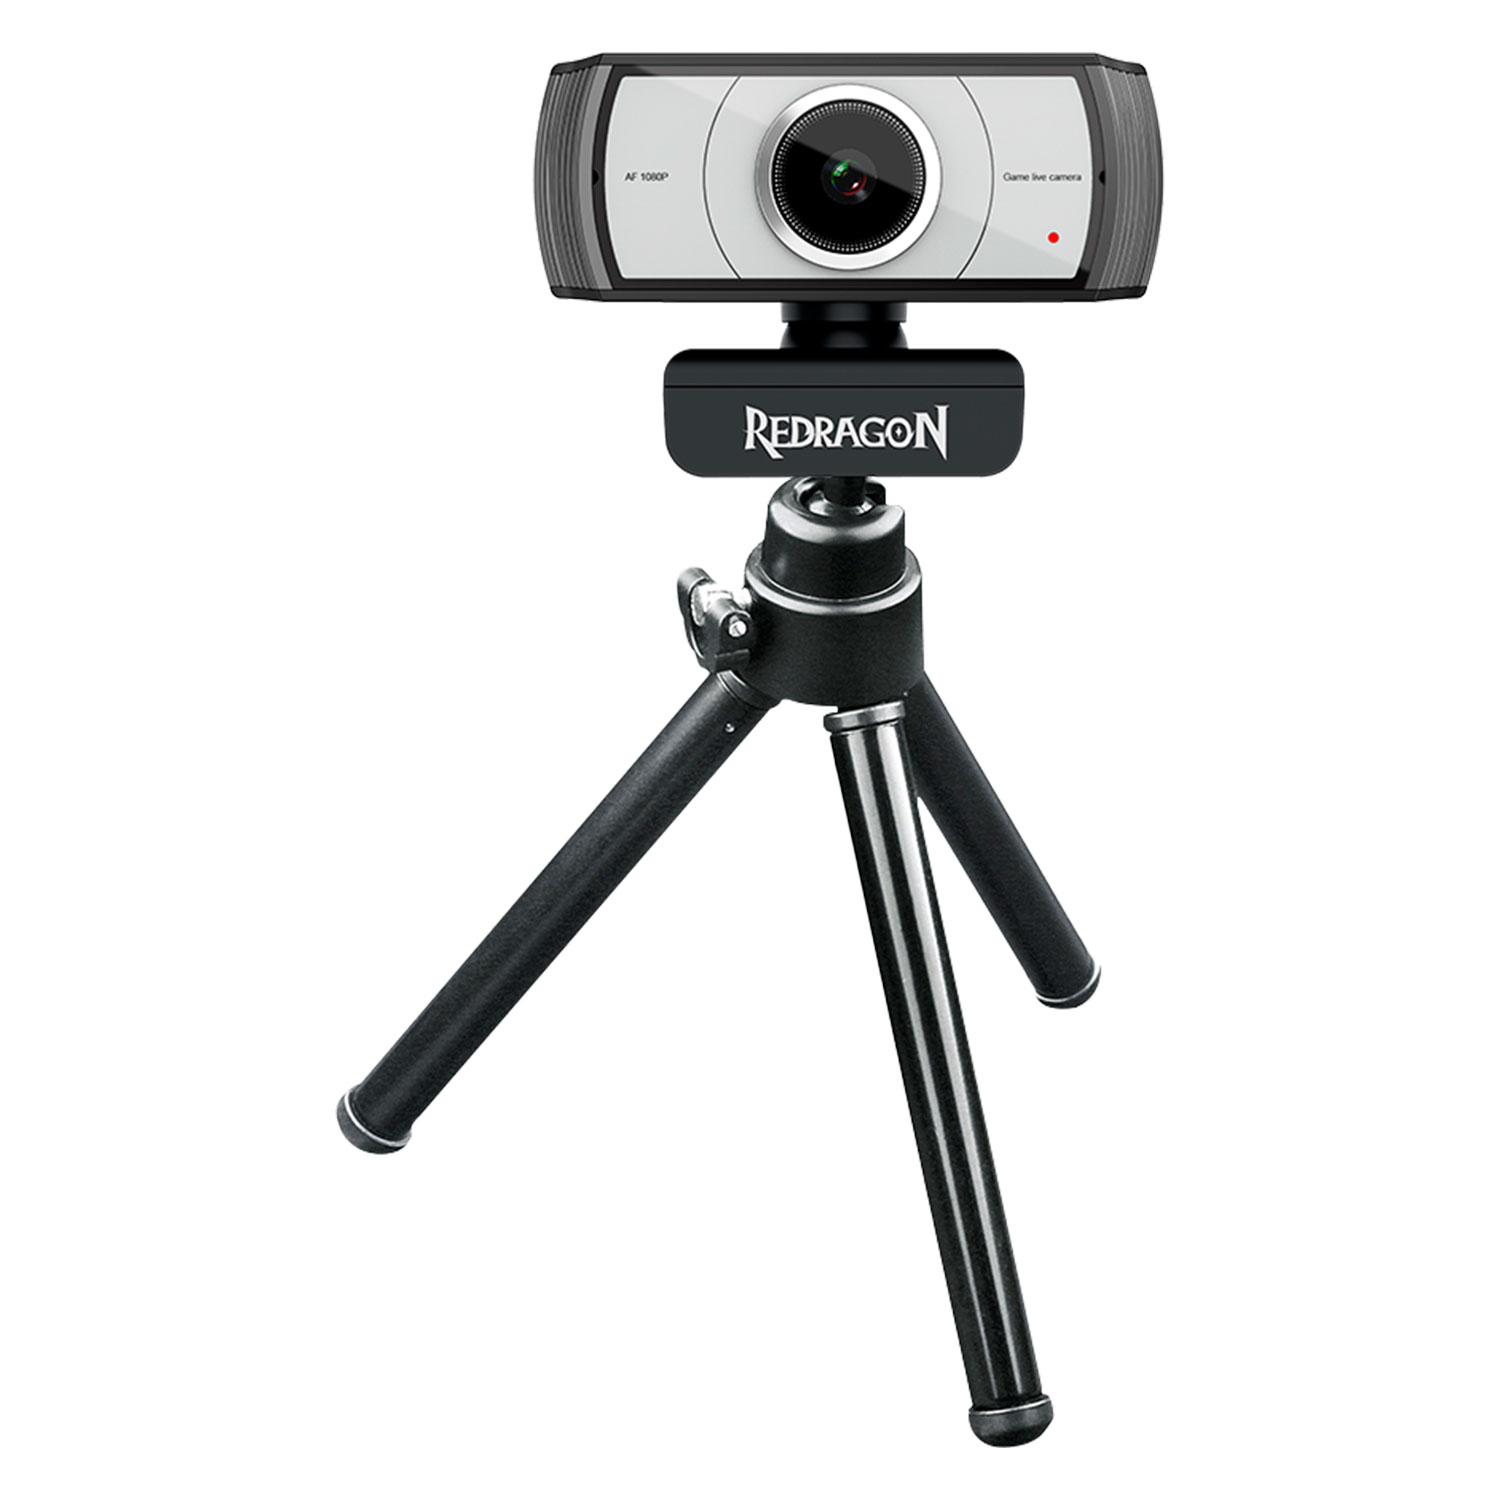 Webcam Redragon Apex GW900-1 / 1080p - Preto (Caixa Danificada)
